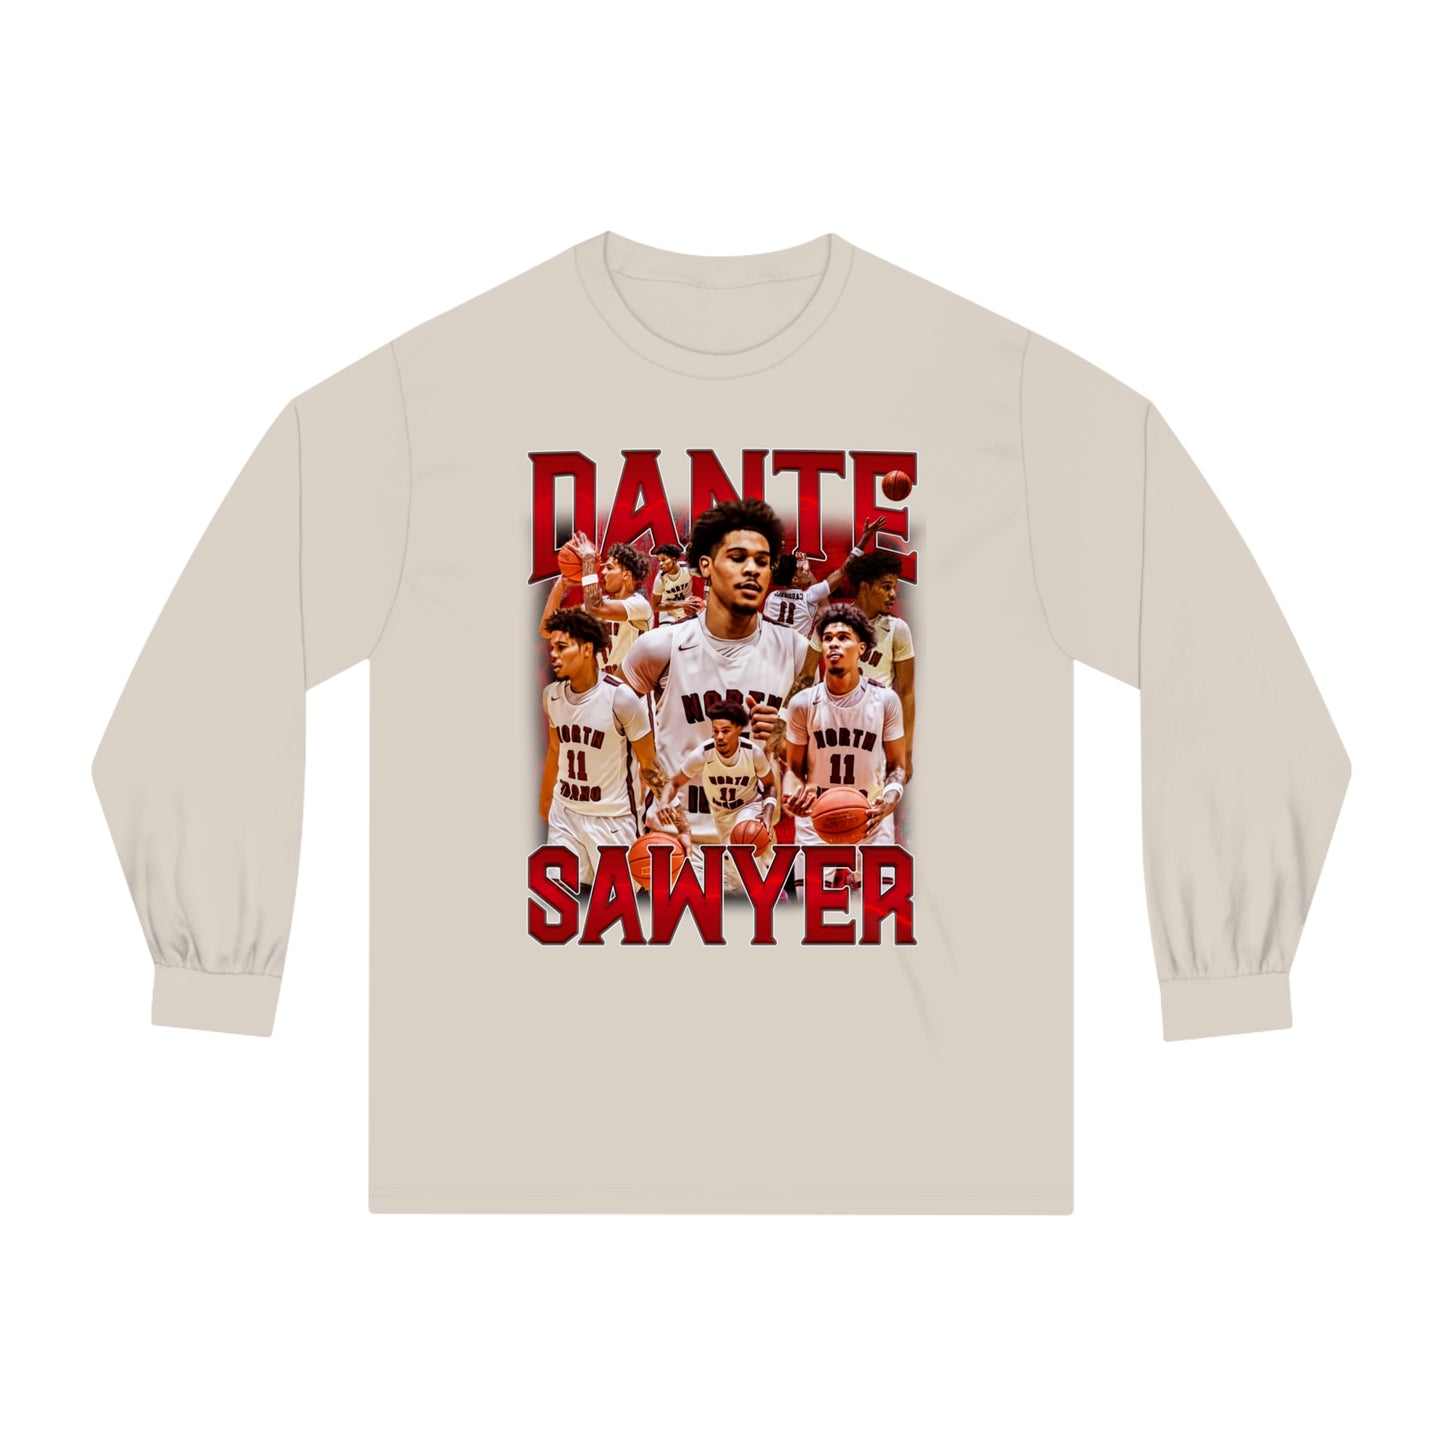 Dante Sawyer Classic Long Sleeve T-Shirt